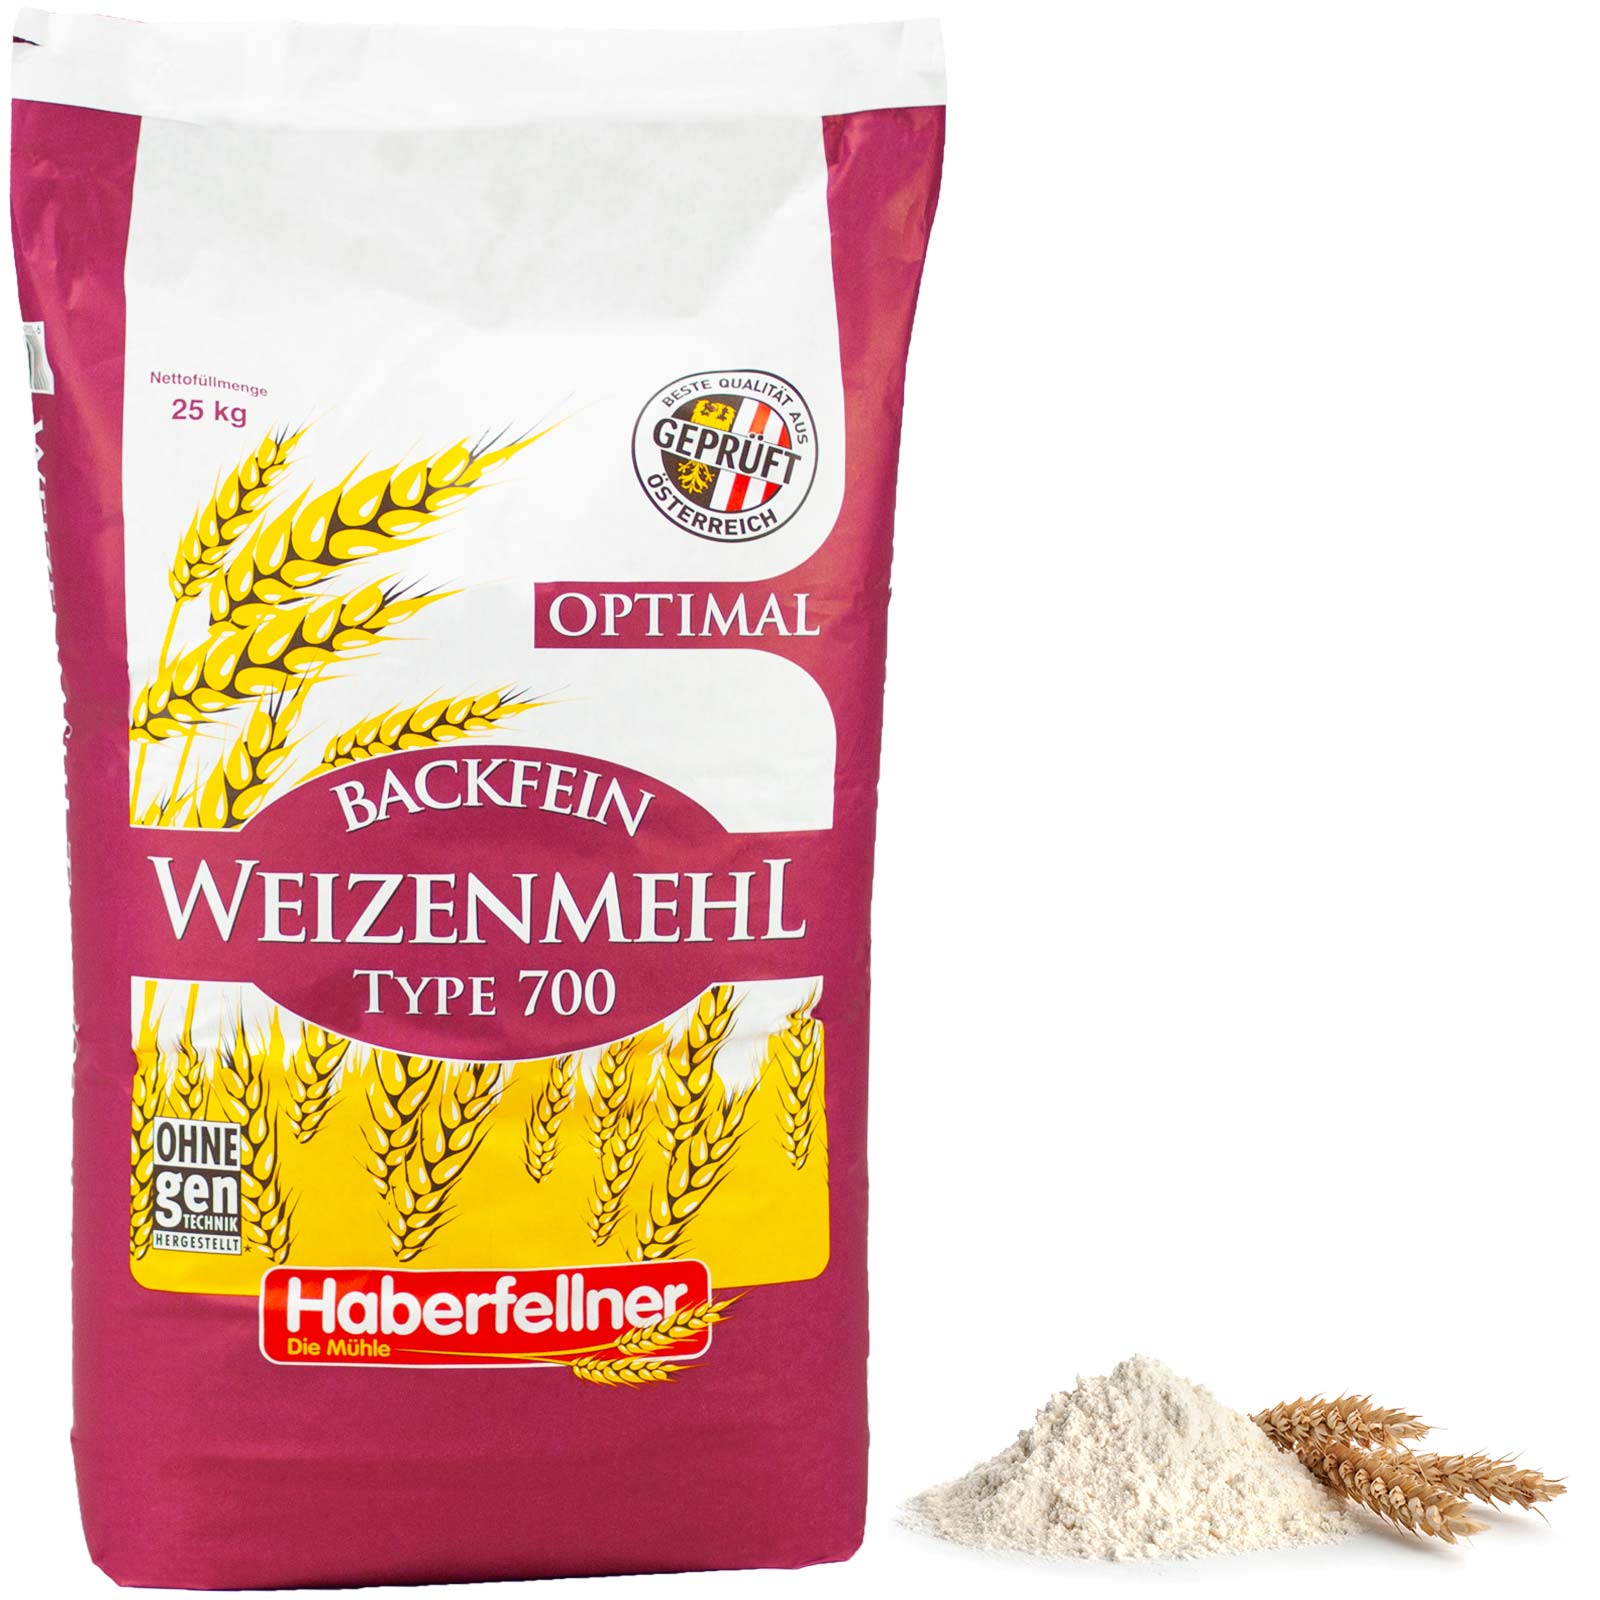 Haberfellner Wheat Flour Type 550 / W700 optimal 1 kg